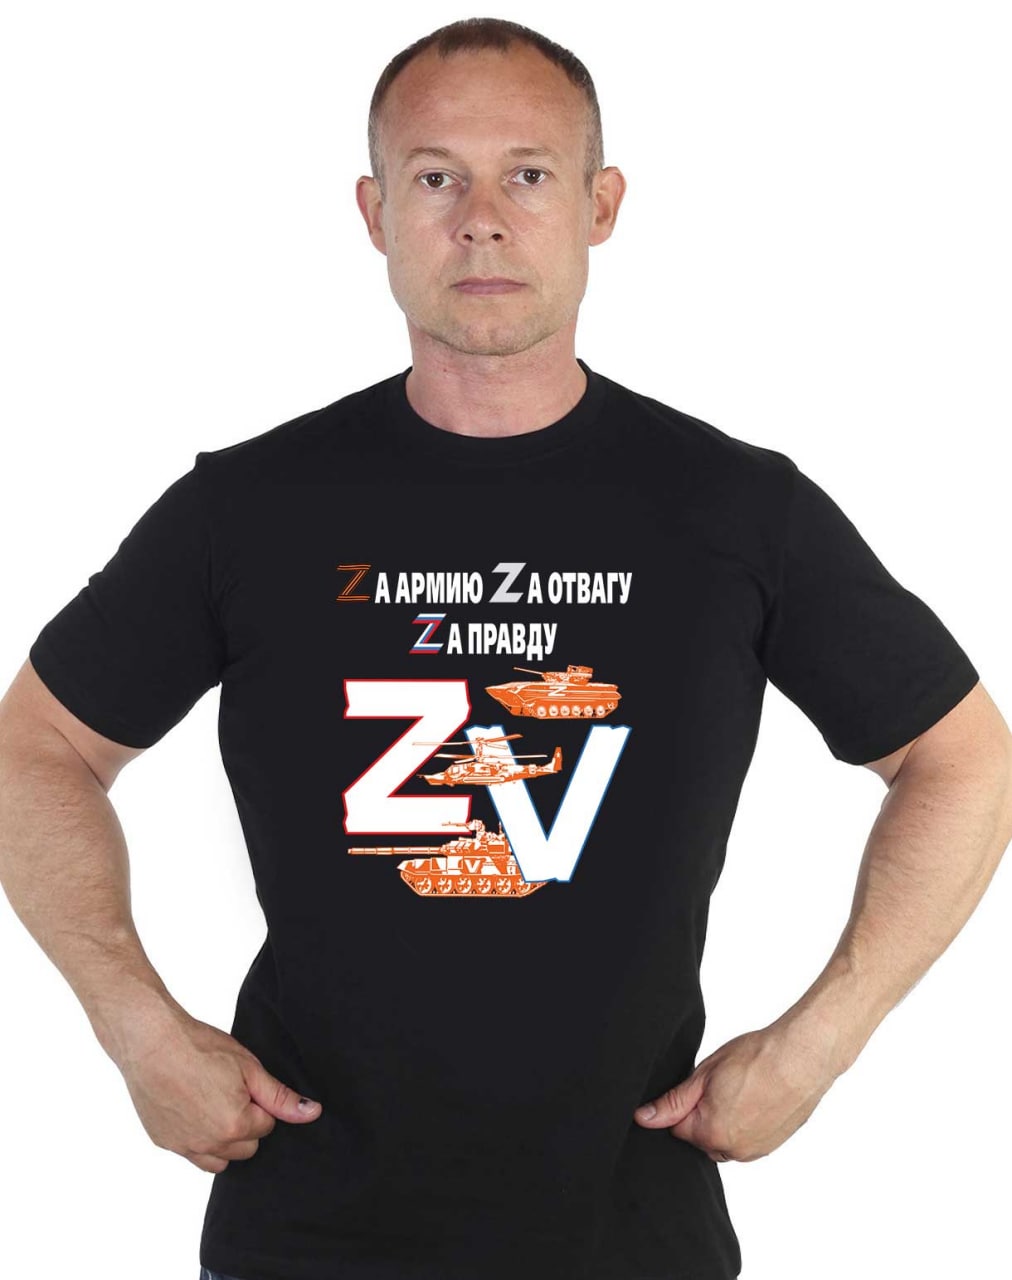 Заказать футболку "Zа правду!"